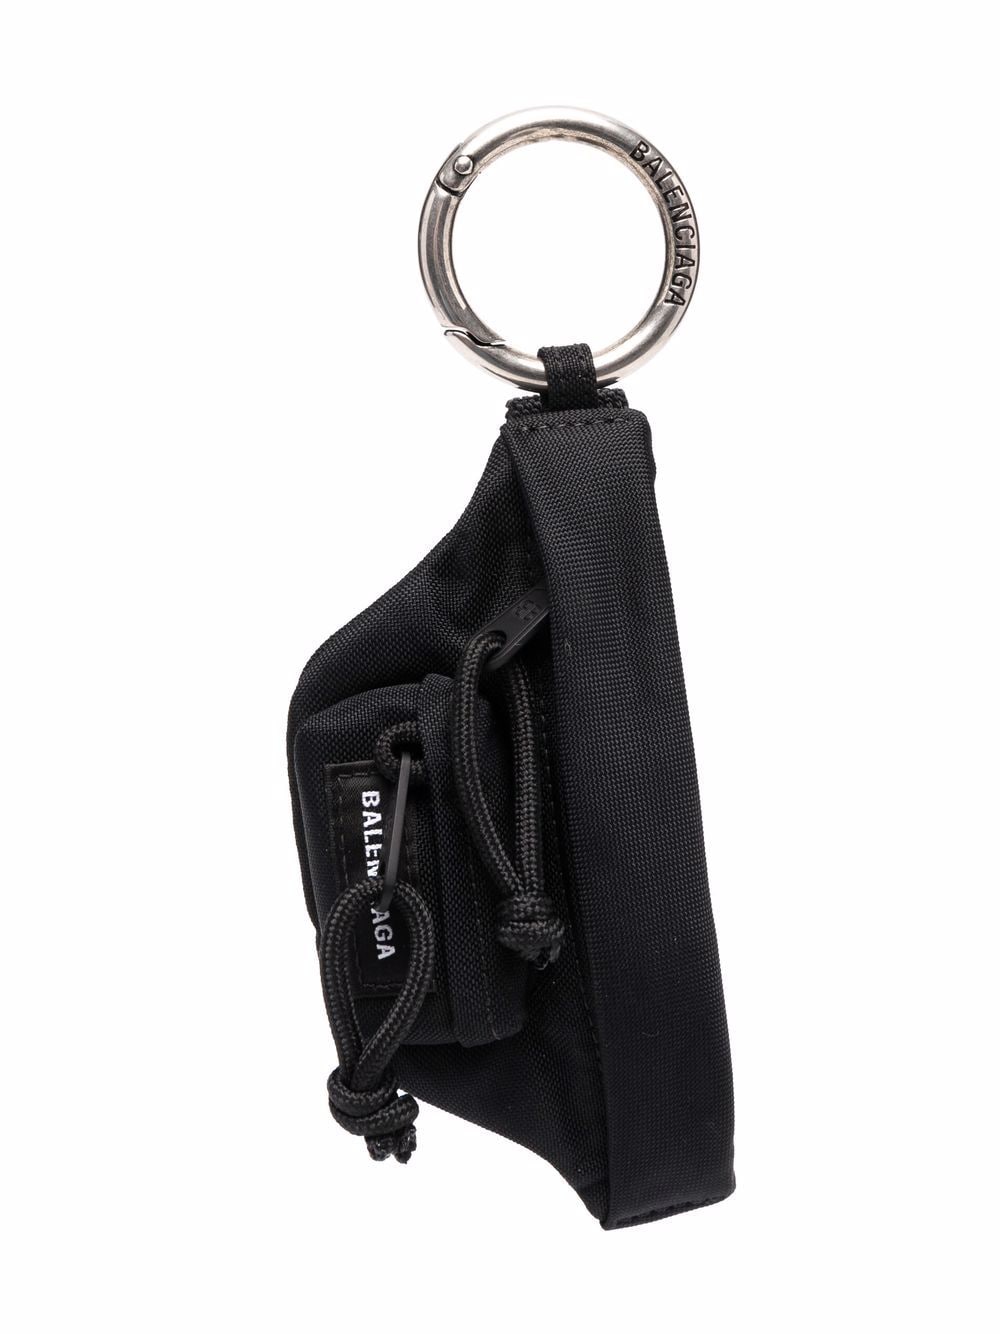 pjx001 Unisex Keychains Mens Keychain Fashion Keyrings for Woman Black Leather Key Chains Lanyards Car Key Ring Bag Charm